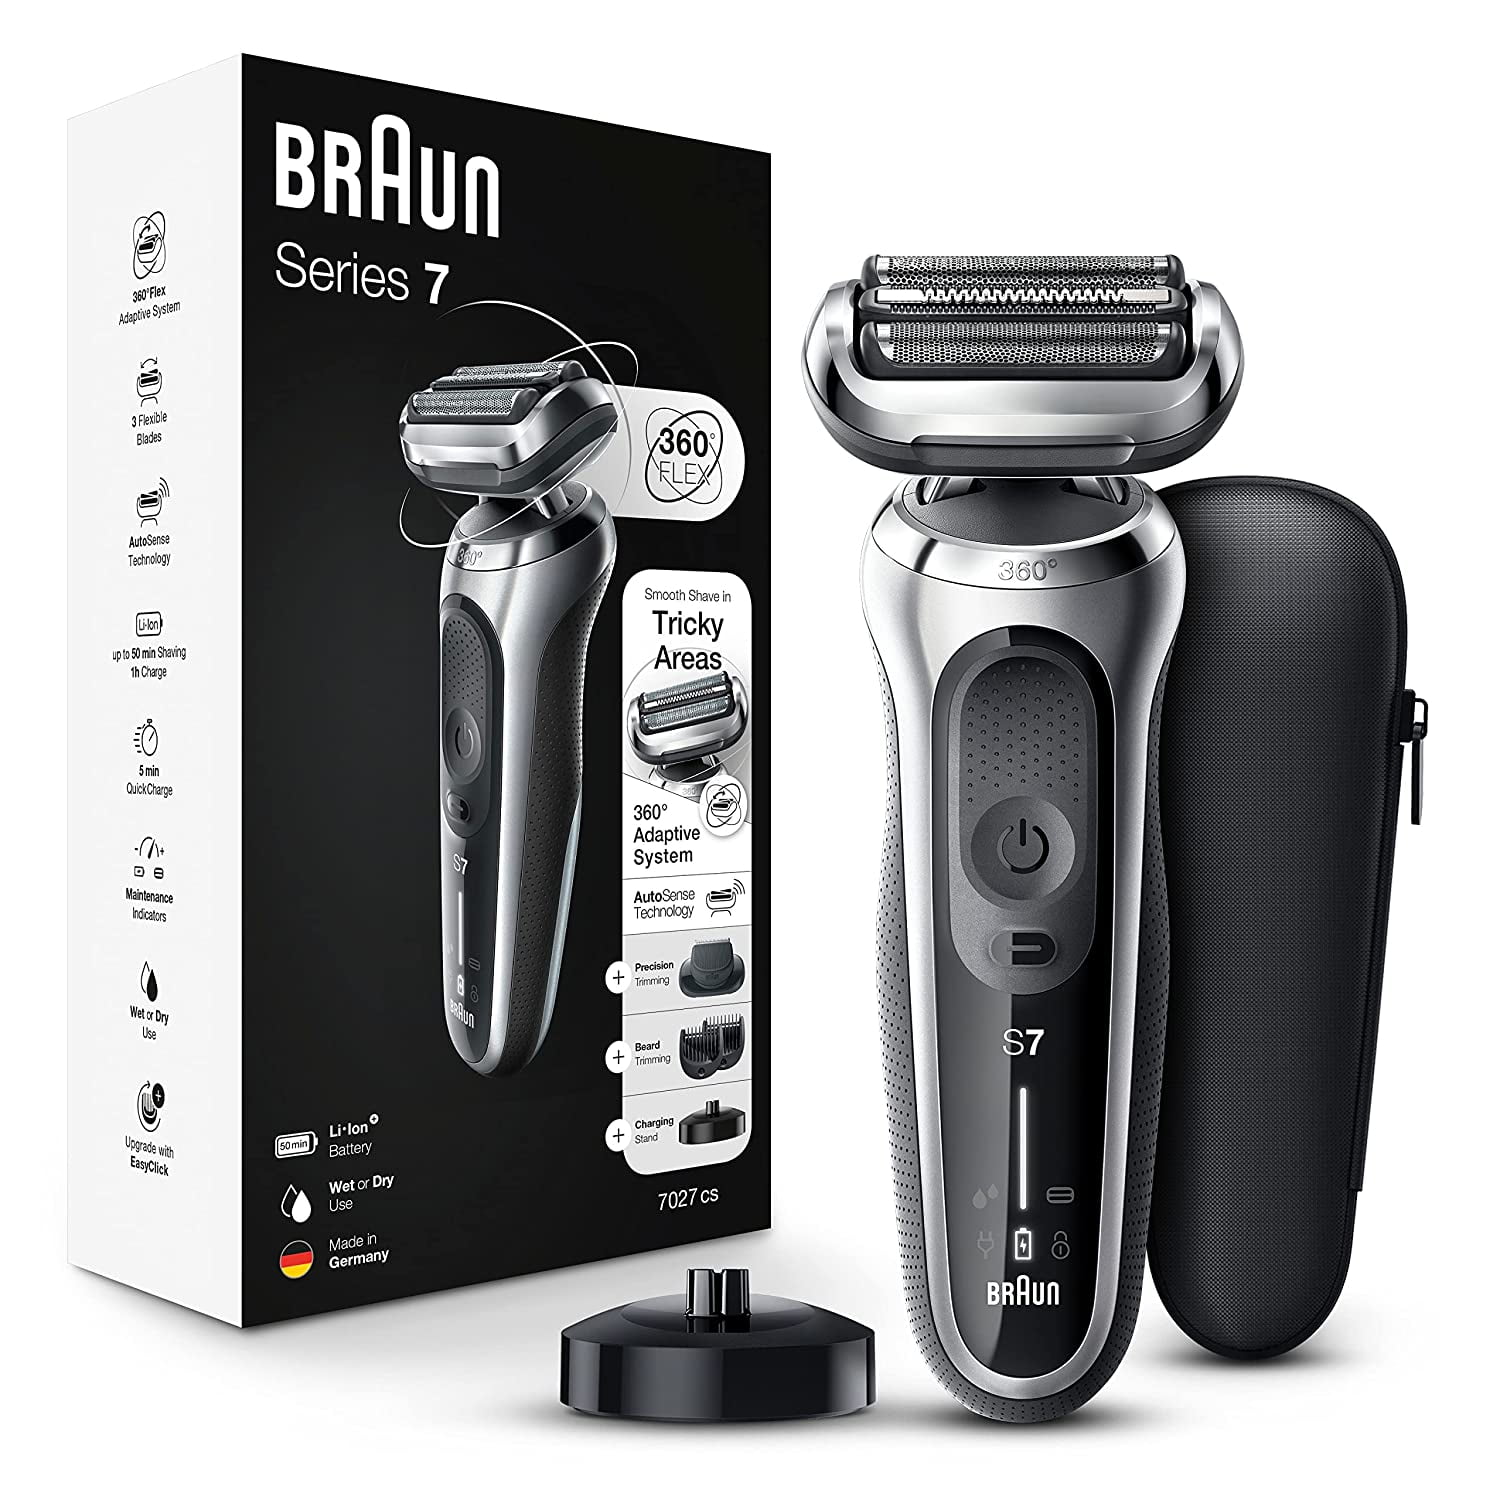 Braun Series 7 360 Flex Head Electric Shaver with Beard Trimmer for Men, 7027cs